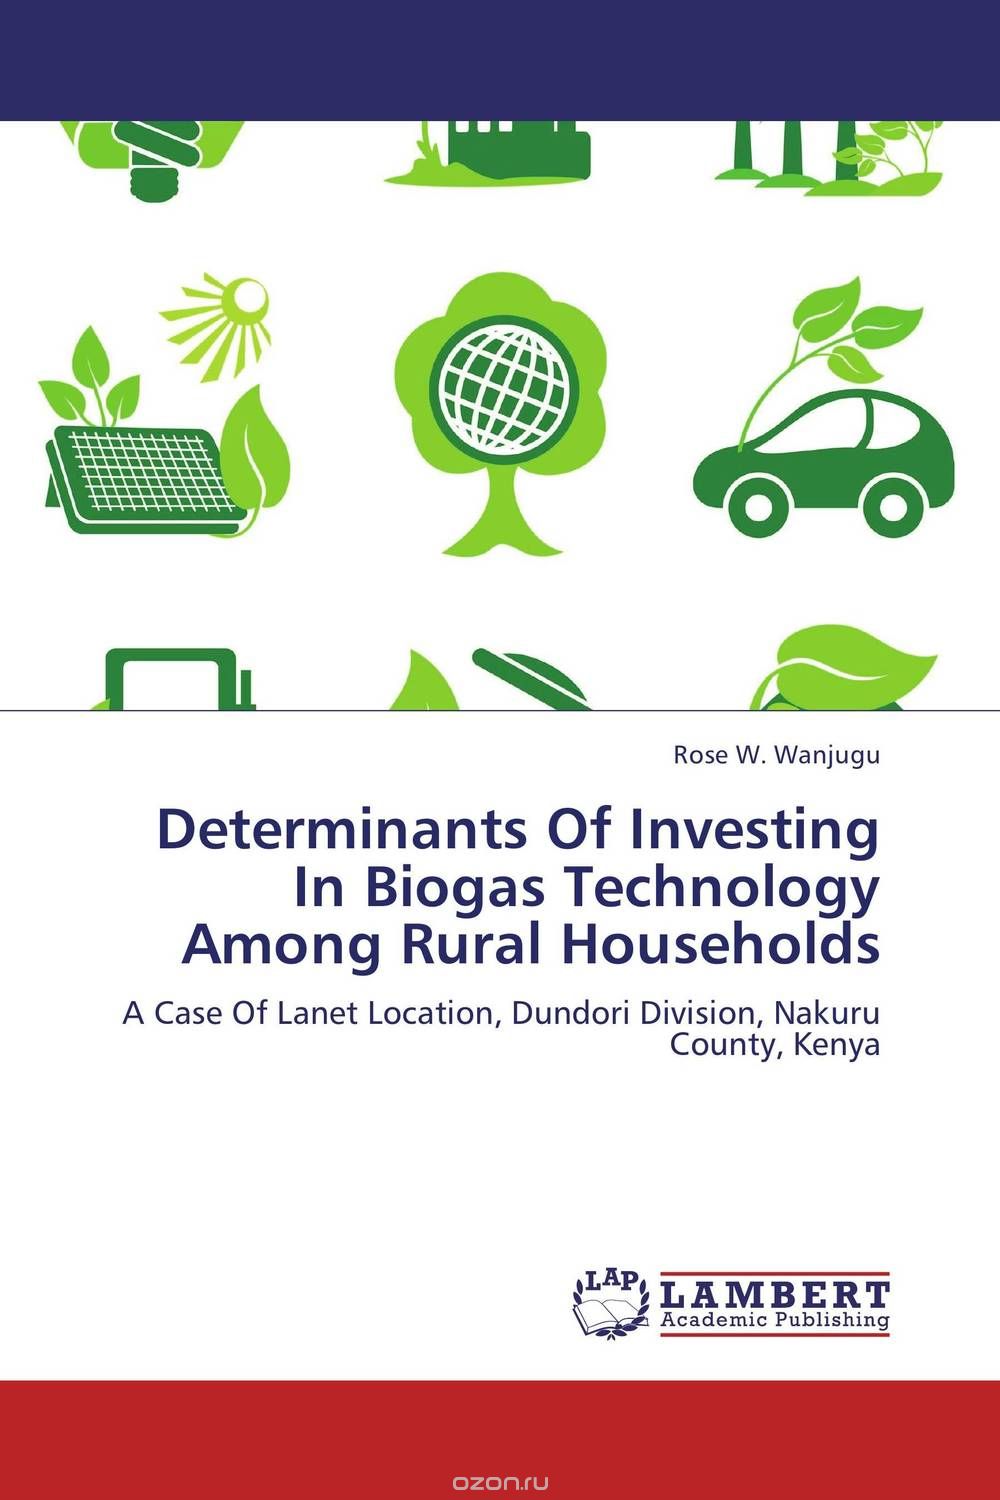 Скачать книгу "Determinants Of Investing In Biogas Technology Among Rural Households"